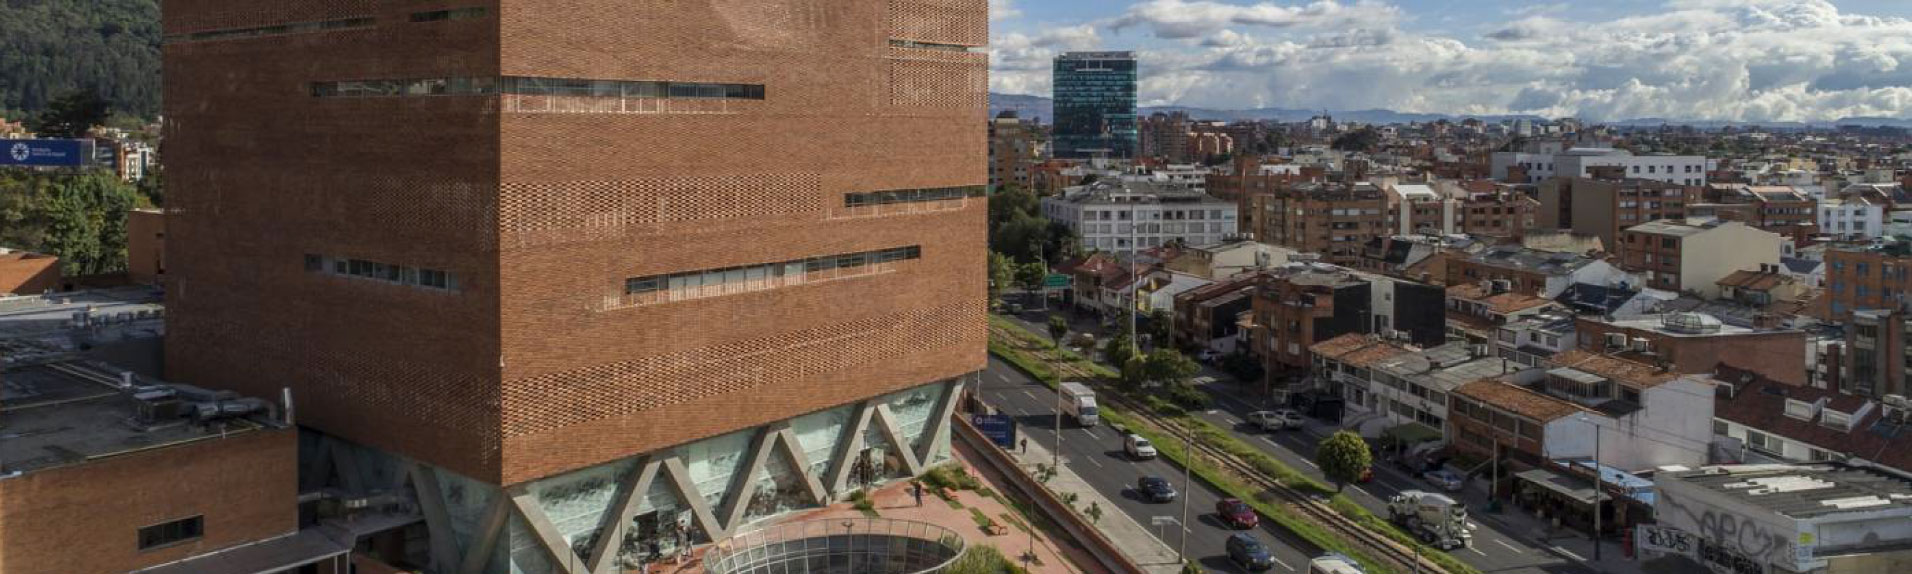 Clínica Fundación Santa Fe de Bogotá - Bogotá, Colombia